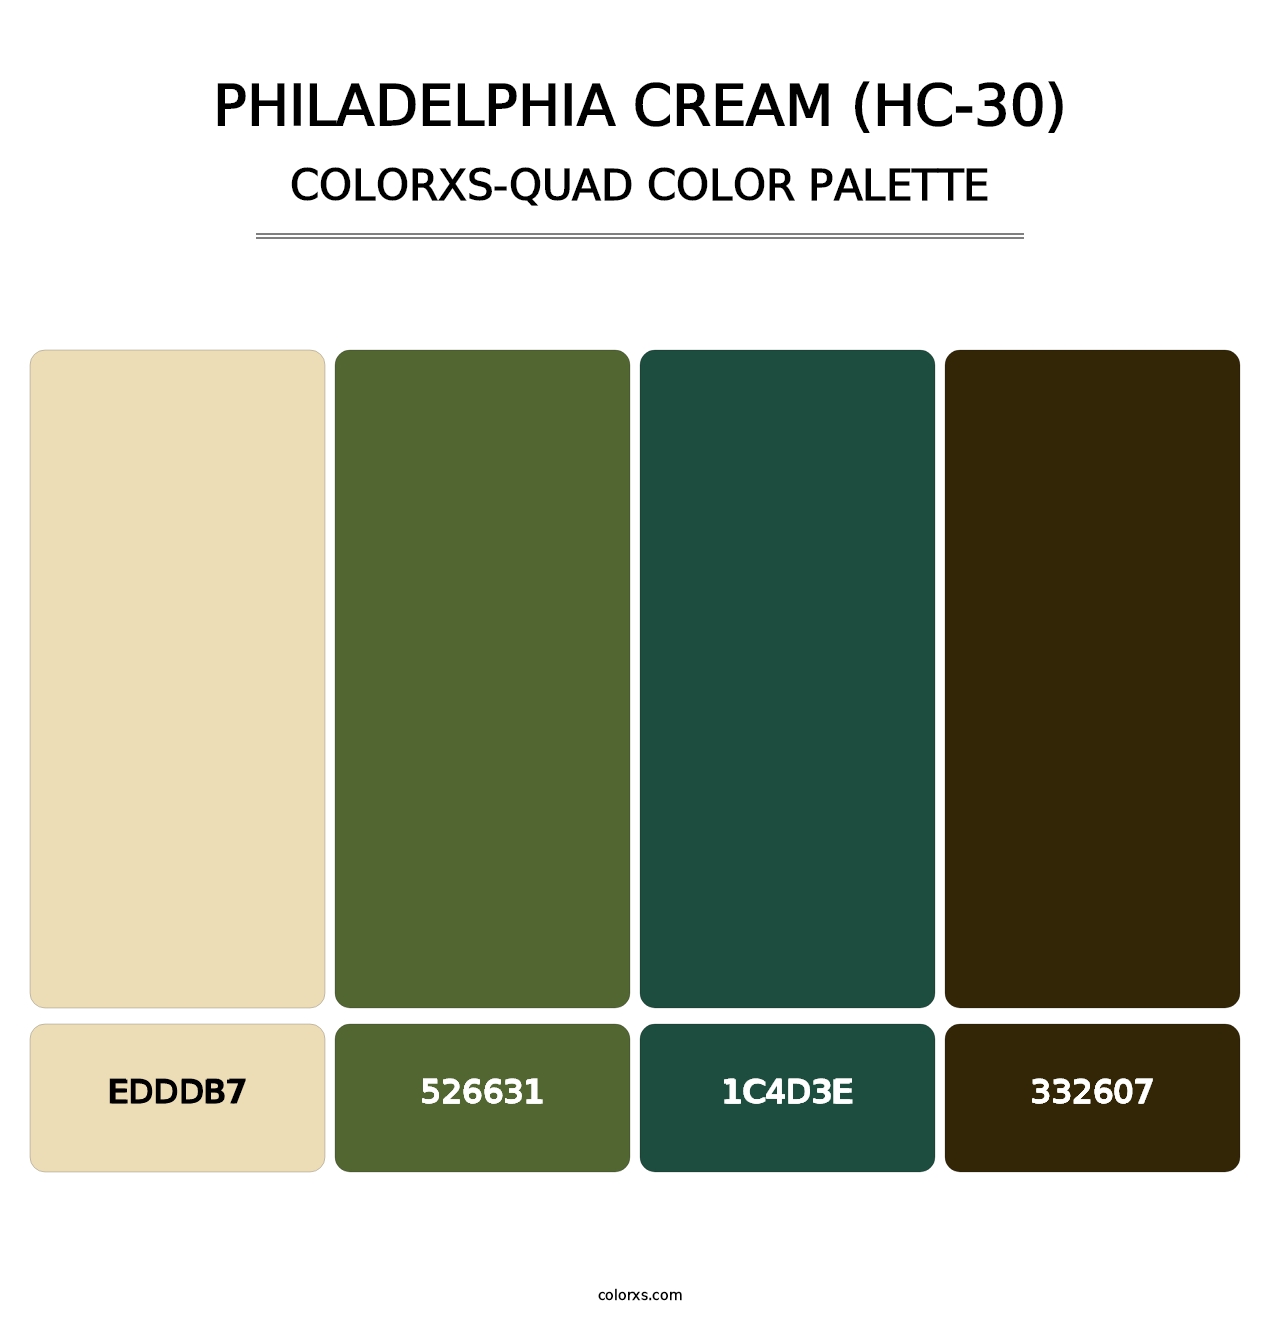 Philadelphia Cream (HC-30) - Colorxs Quad Palette